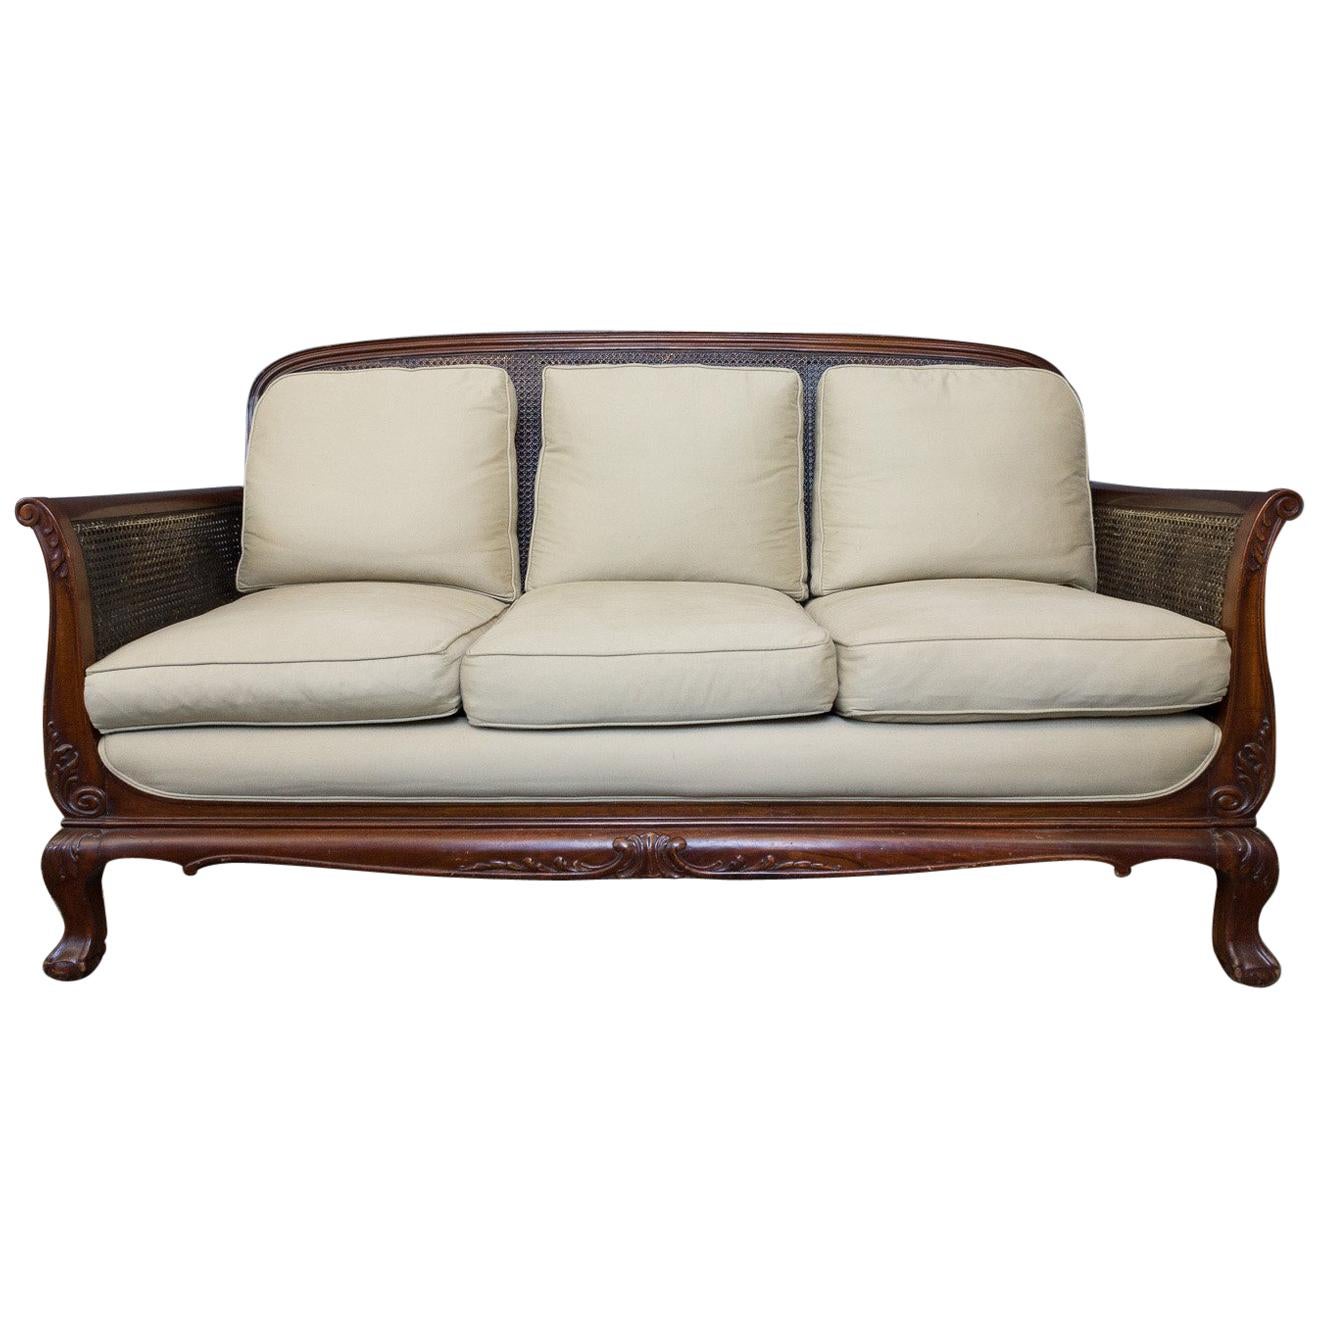 Anglo-Indian Colonial Style Mahogany Sofa